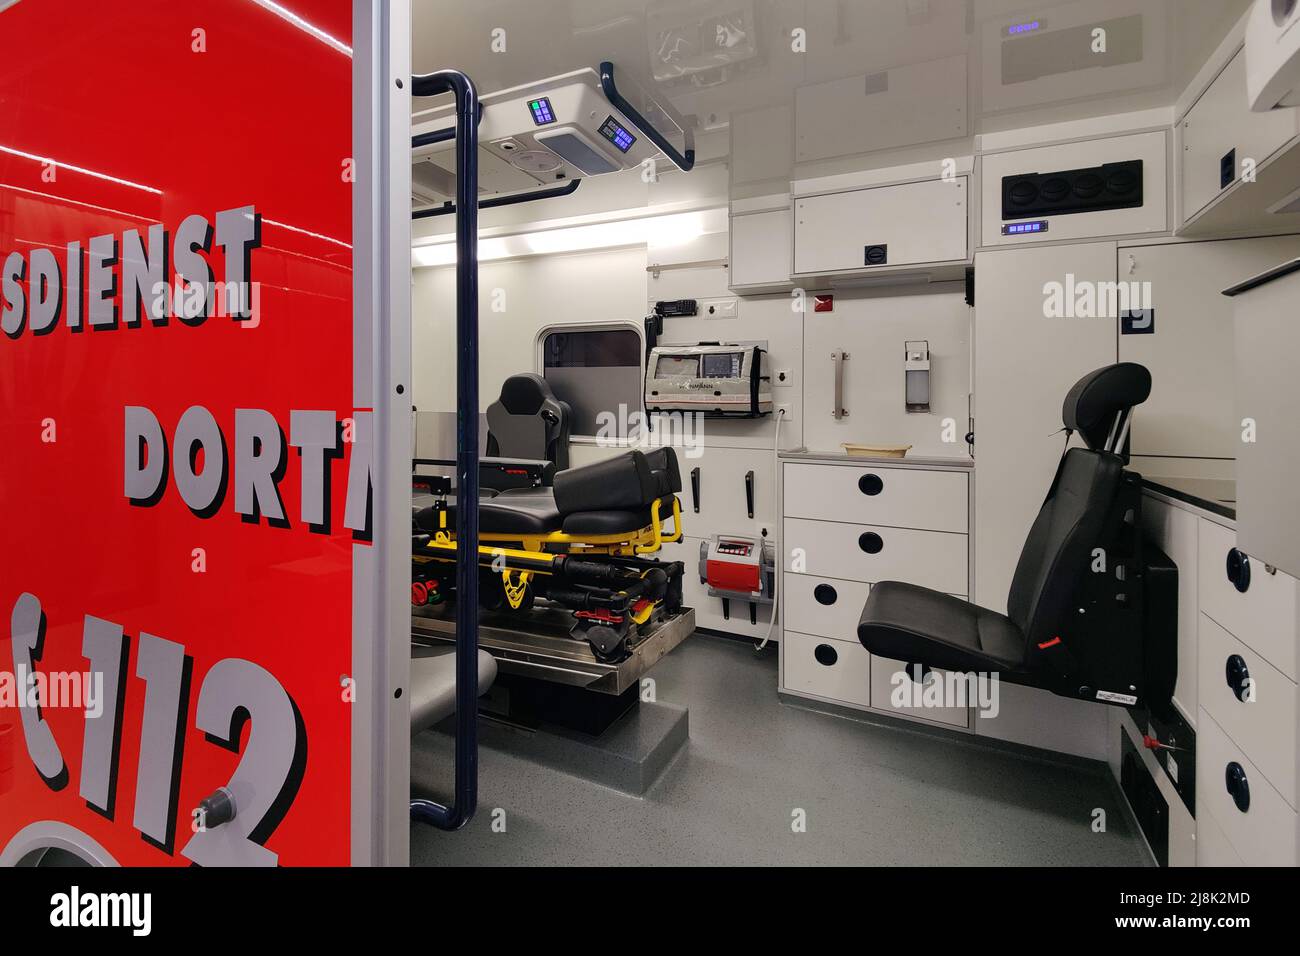 interior view of a ambulance vehicle, Germany Stock Photo